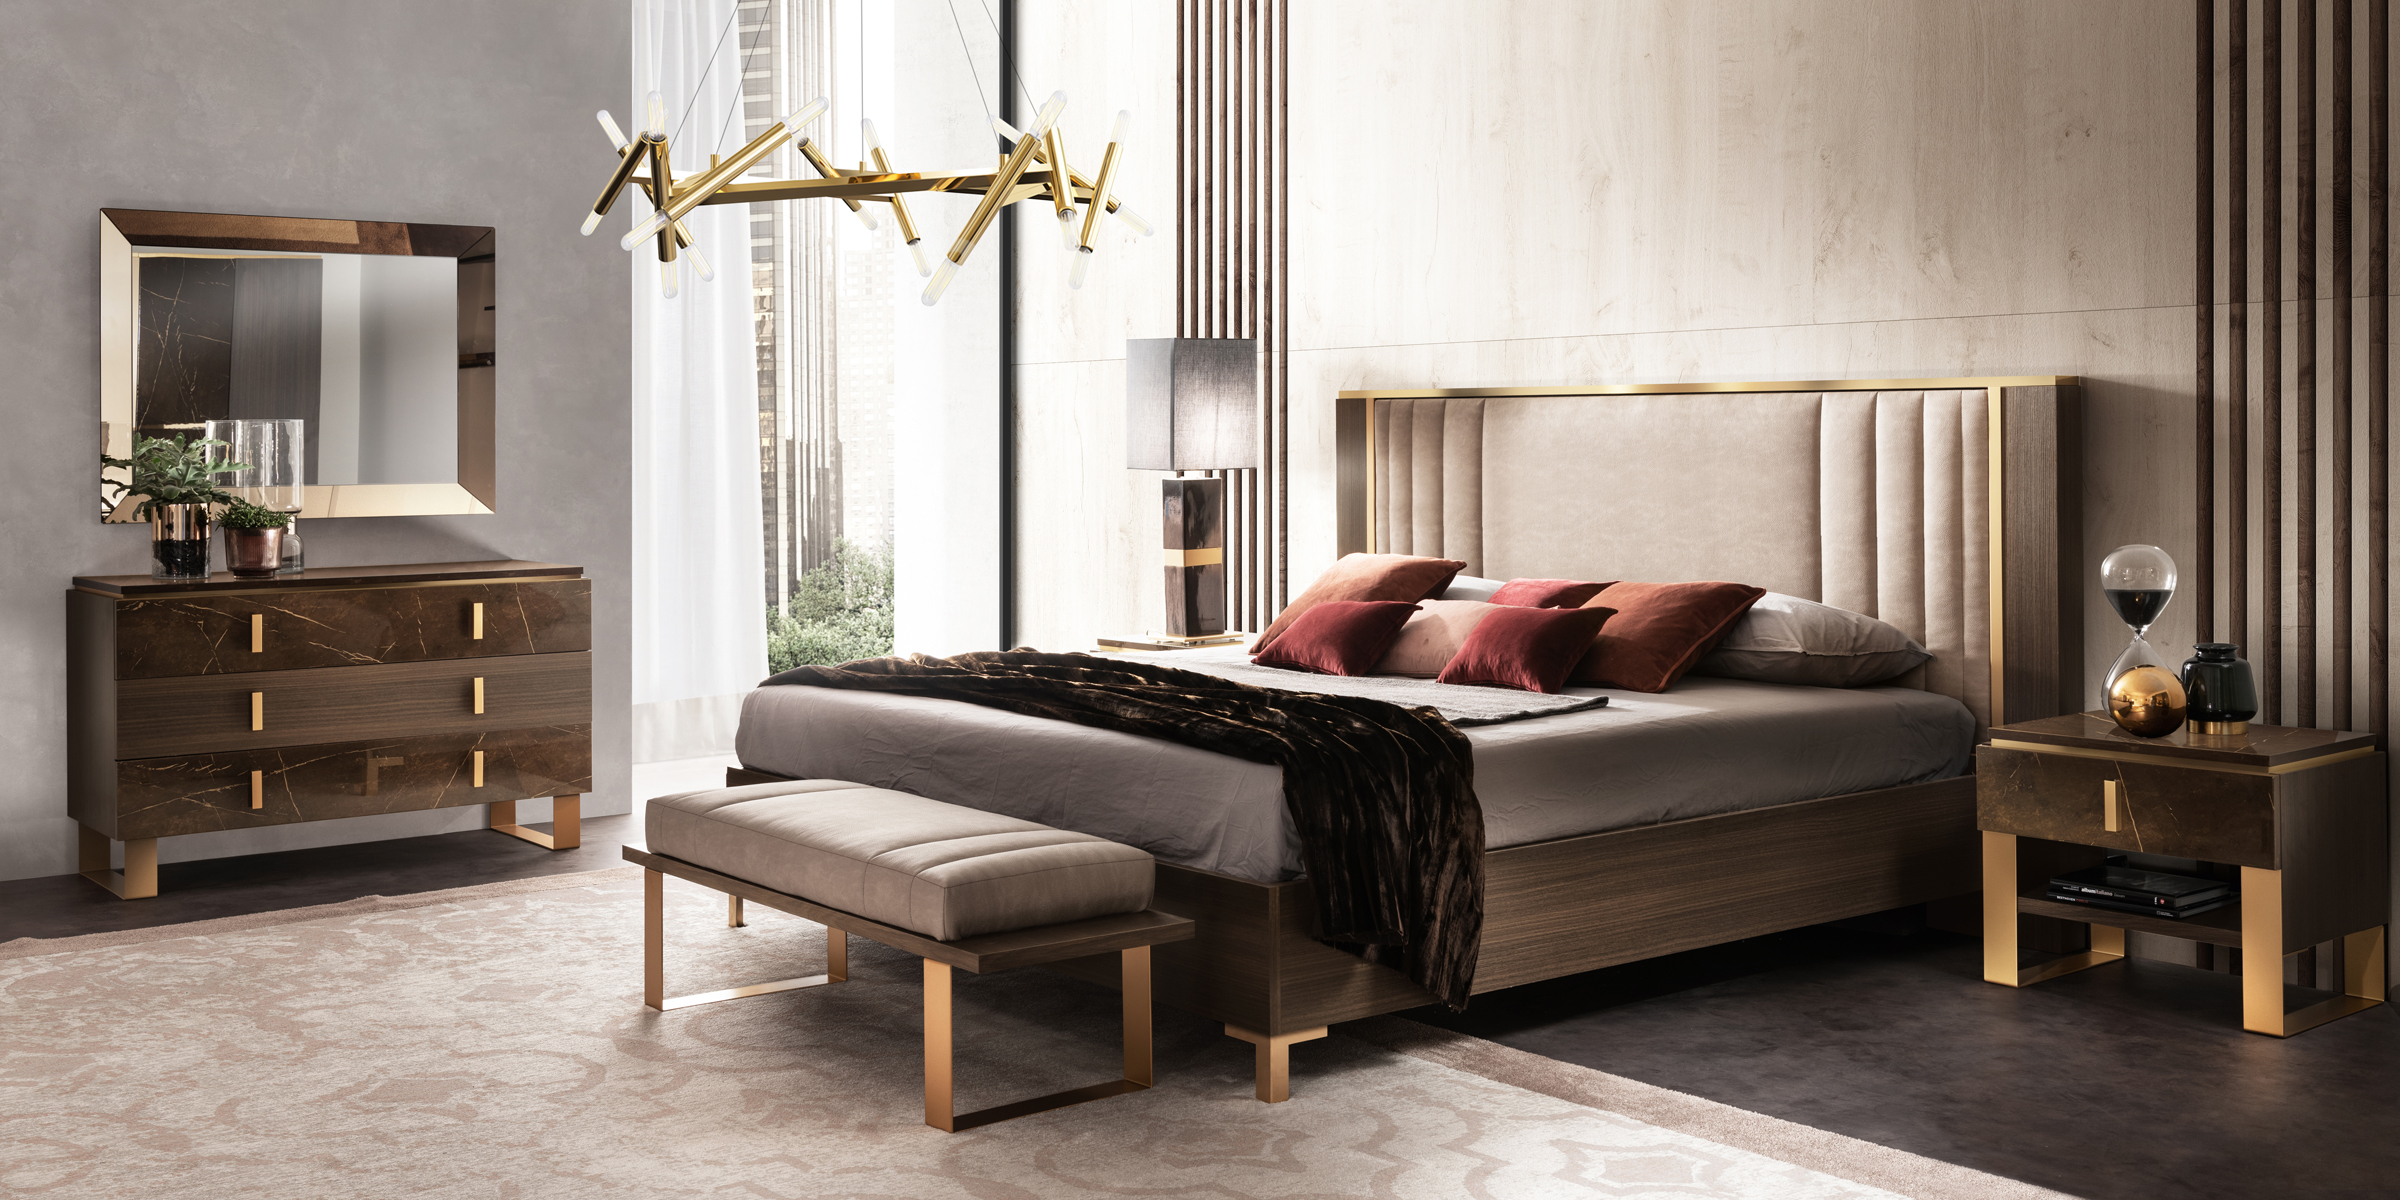 Bedroom Furniture Nightstands Essenza Bedroom by Arredoclassic, Italy Additional